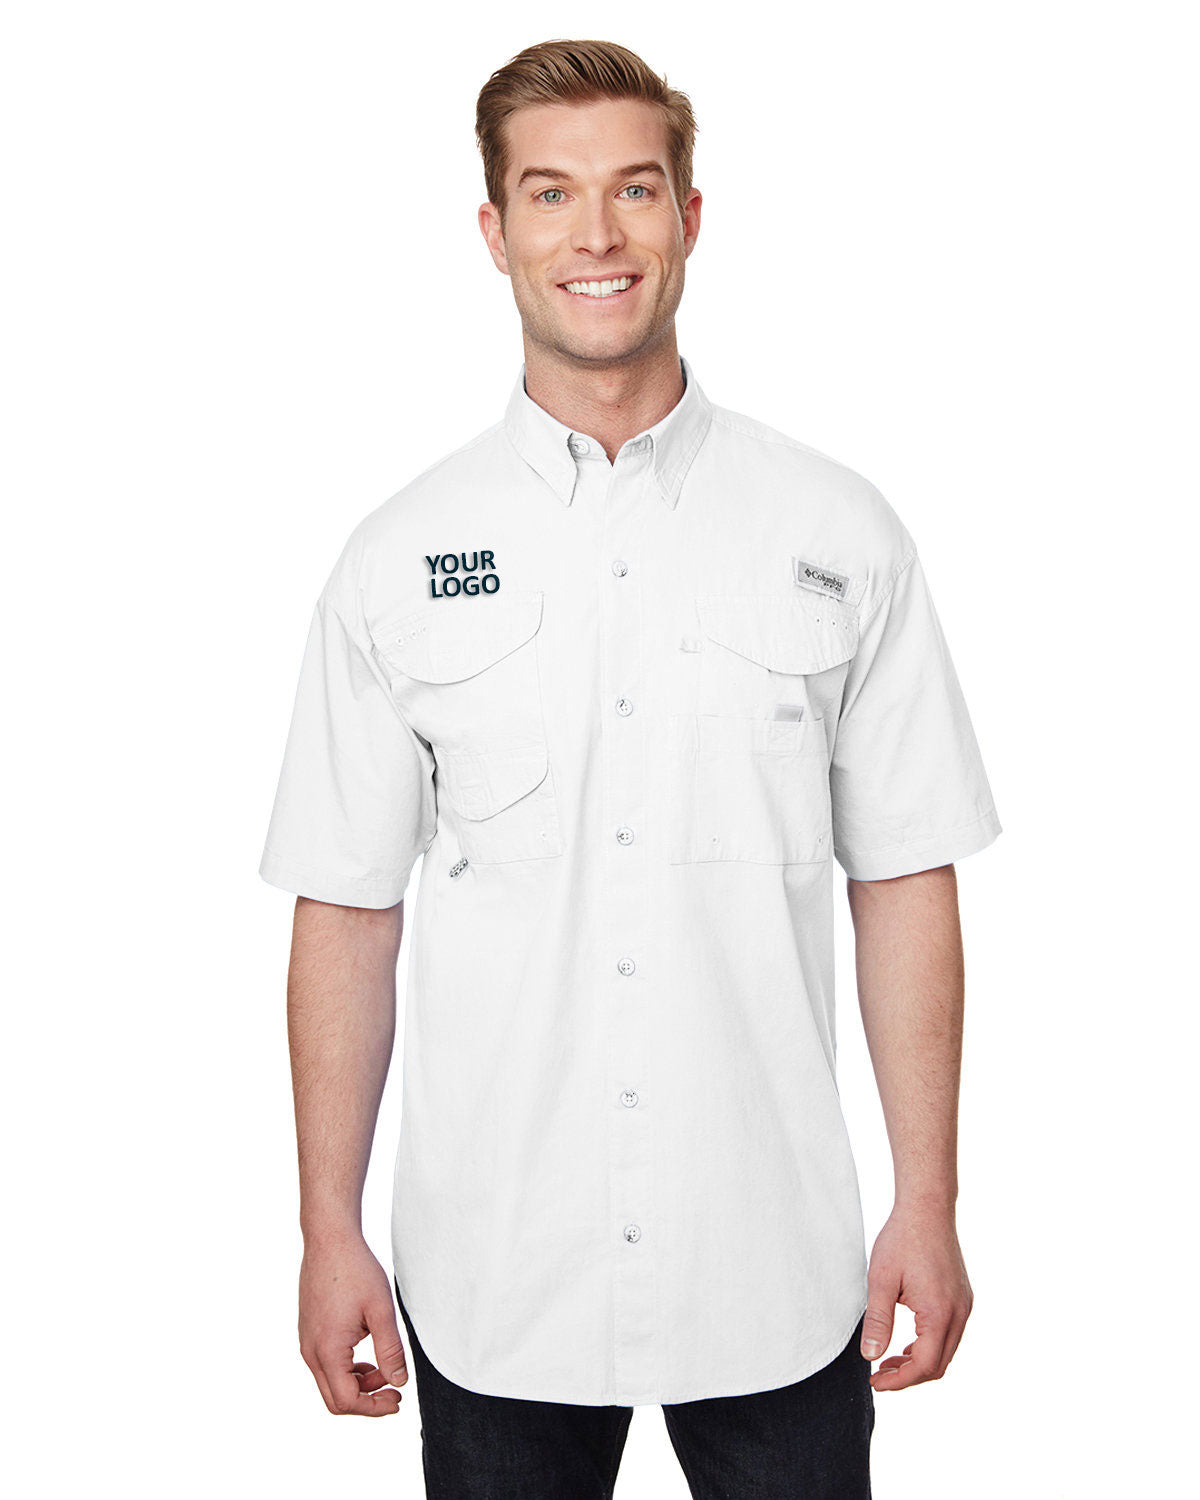 Columbia White 7130 custom embroidered shirts